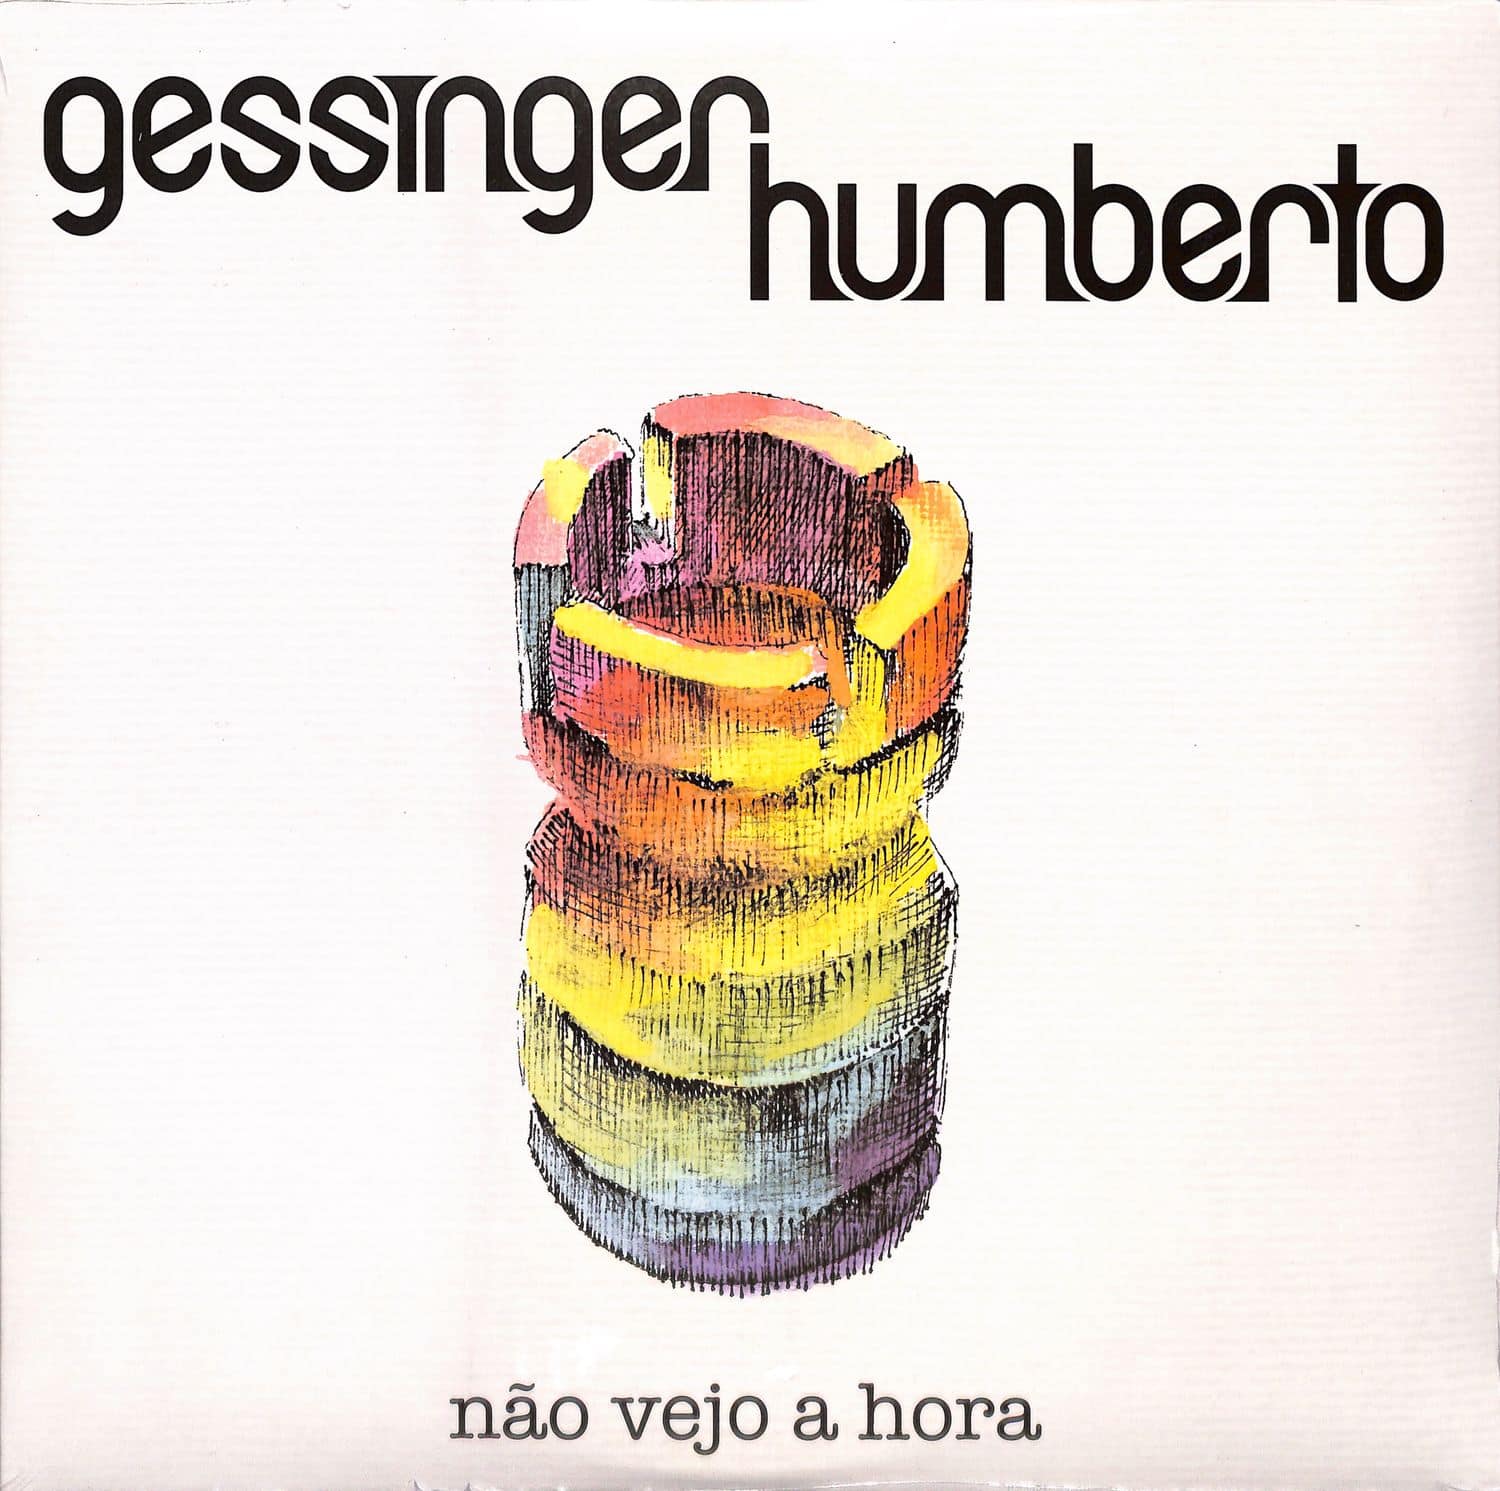 Humberto Gessinger - NAO VEJO A HORA 